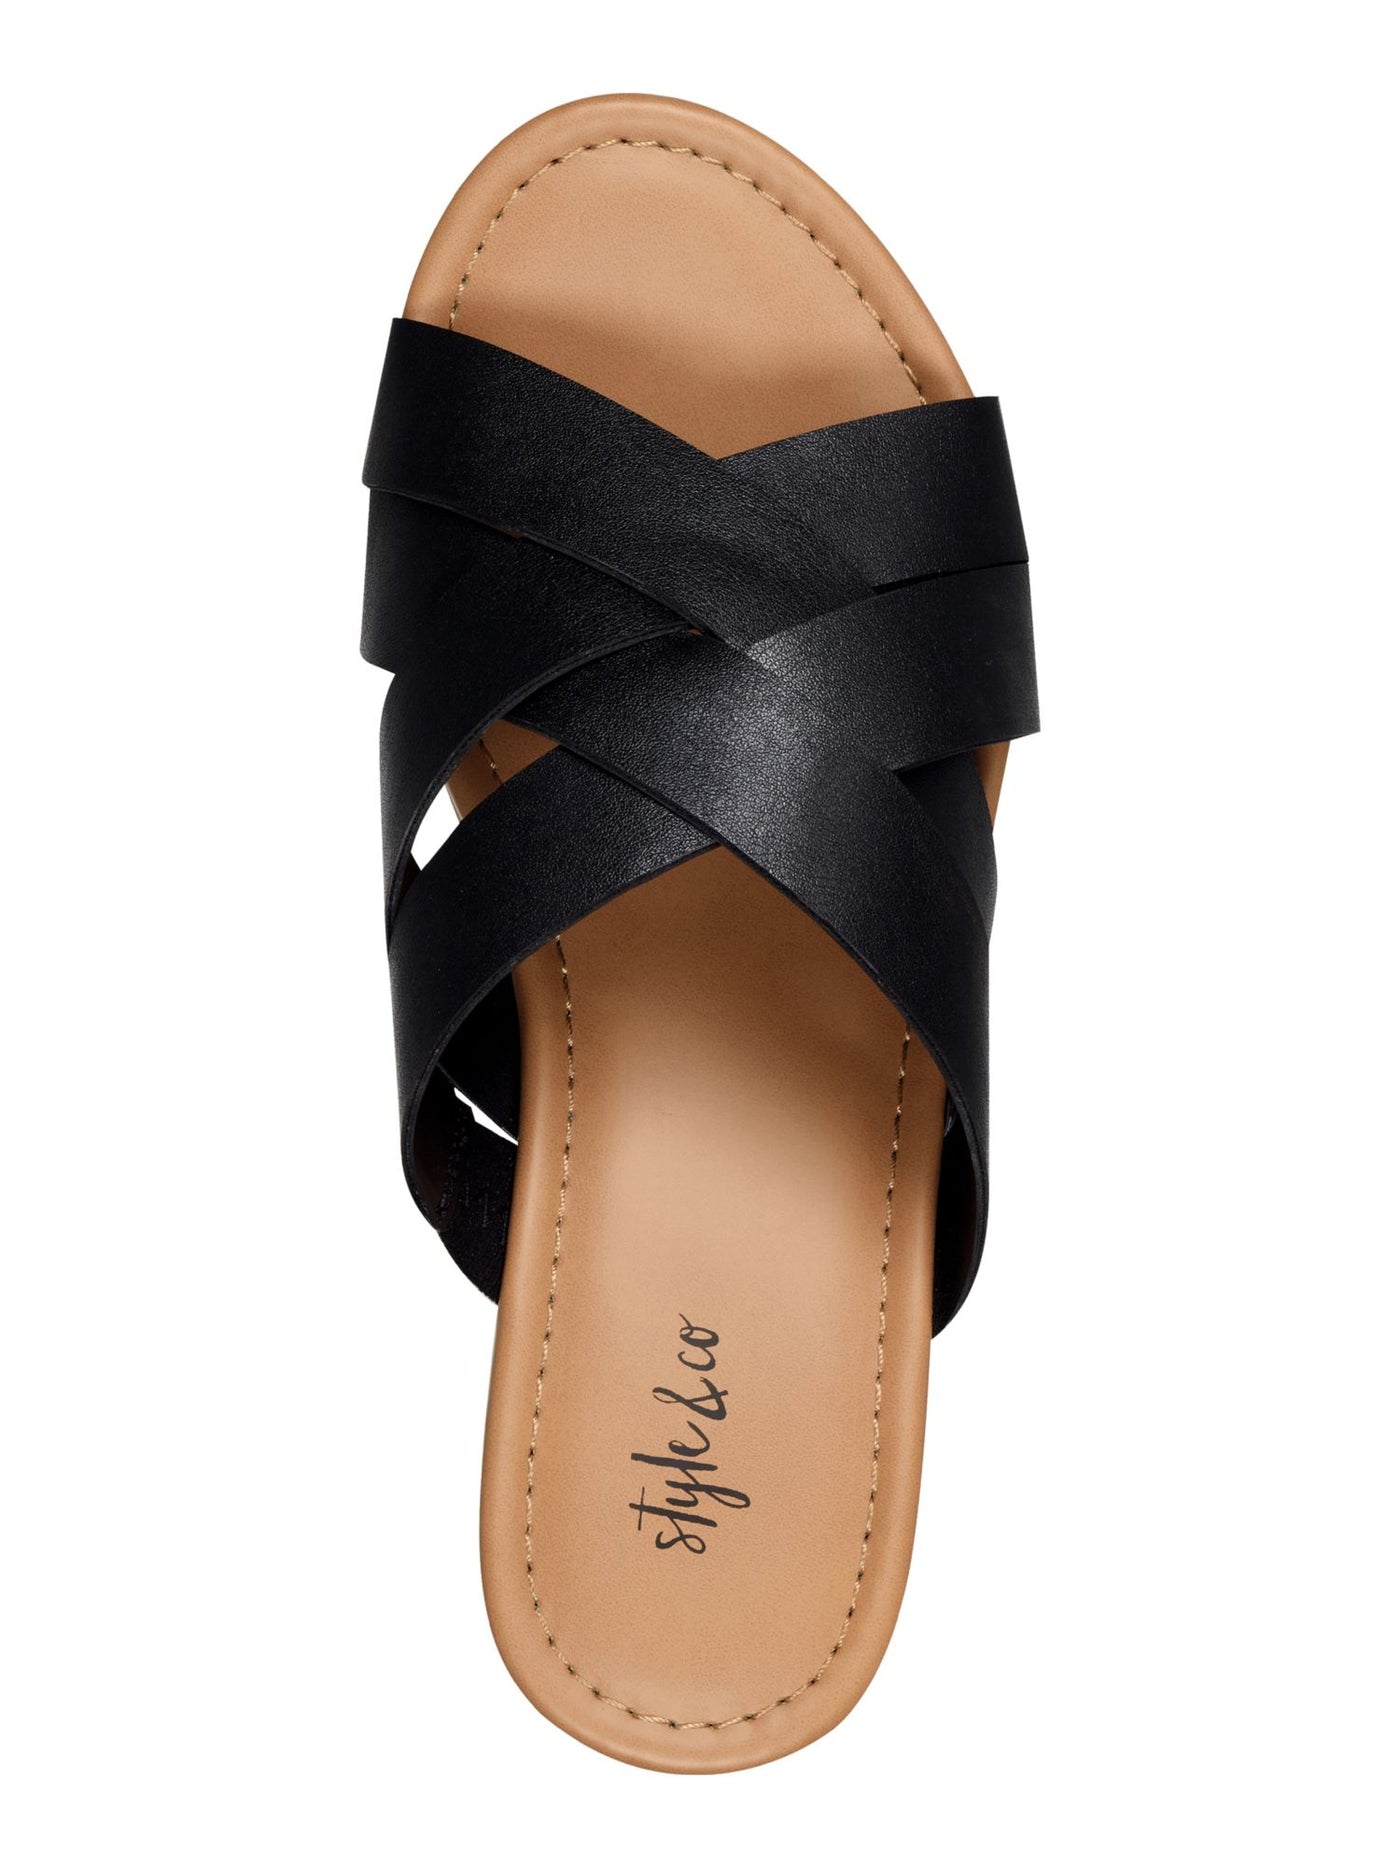 STYLE & COMPANY Womens Black 1-1/2" Platform Comfort Woven Violettee Round Toe Wedge Slip On Heeled Sandal 9.5 M